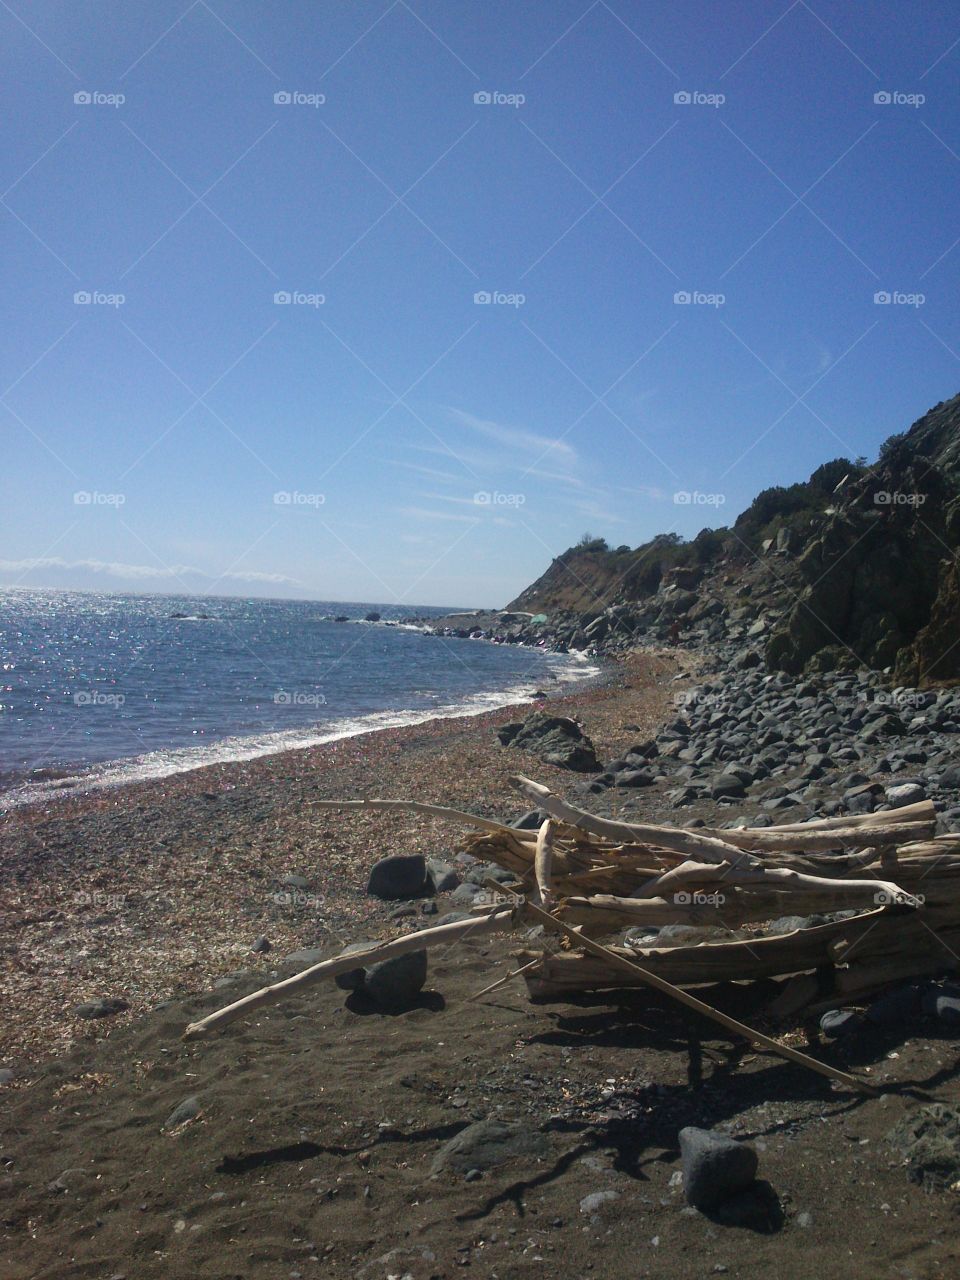 #sea#seashore#summer#bay#stone#landscape#mediterran#italy#wood#stone#water